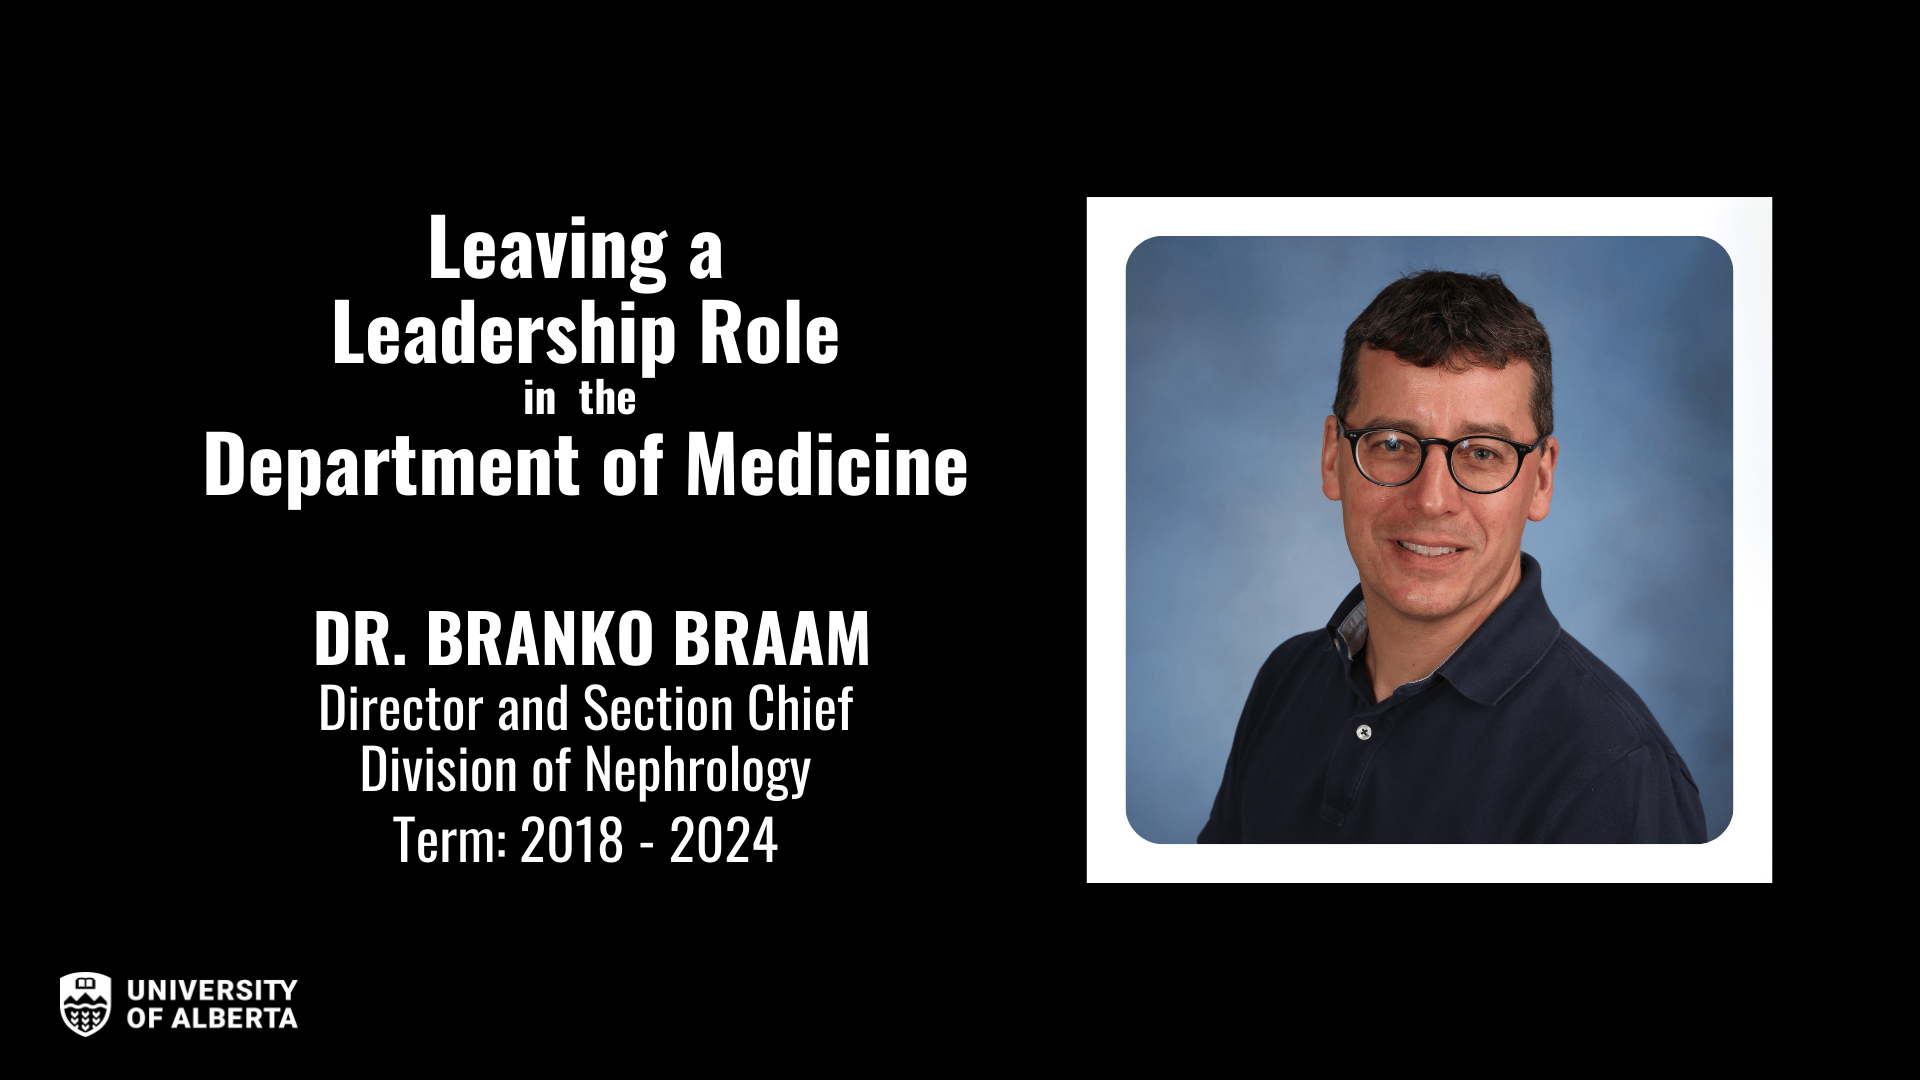 Dr. Branko Braam